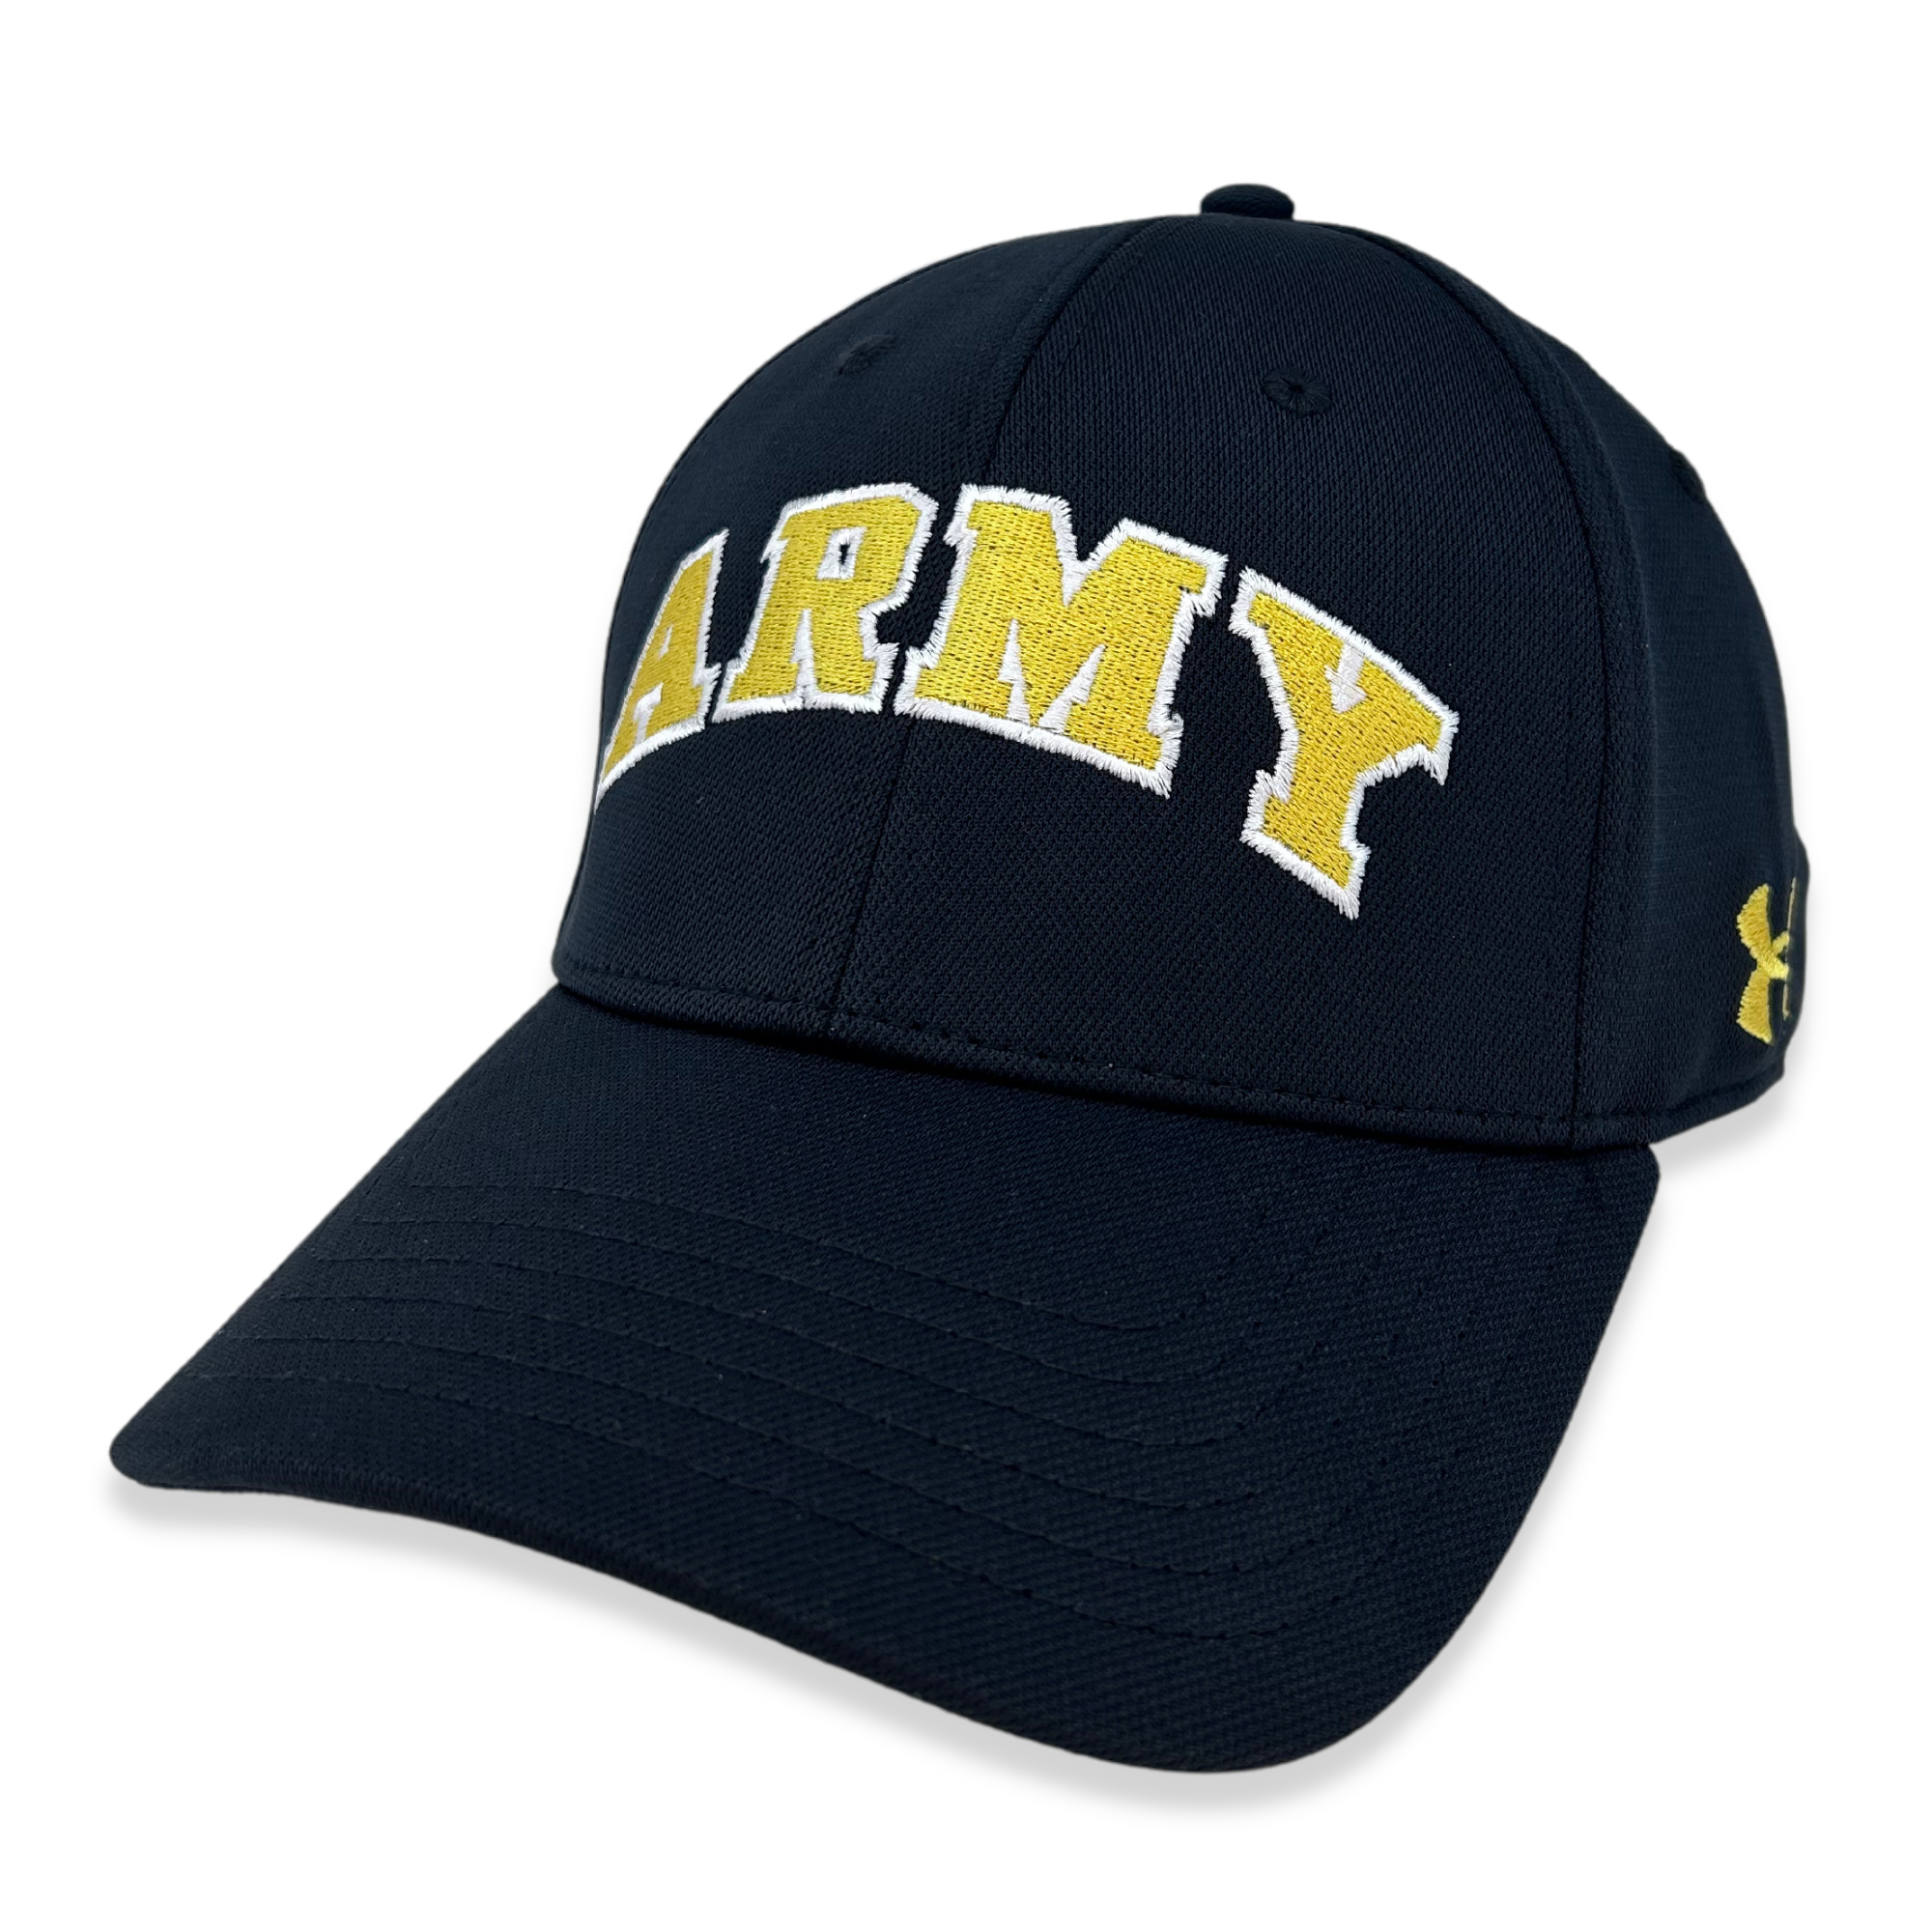 Army Under Armour Blitzing Flex (Black) Hat Fit